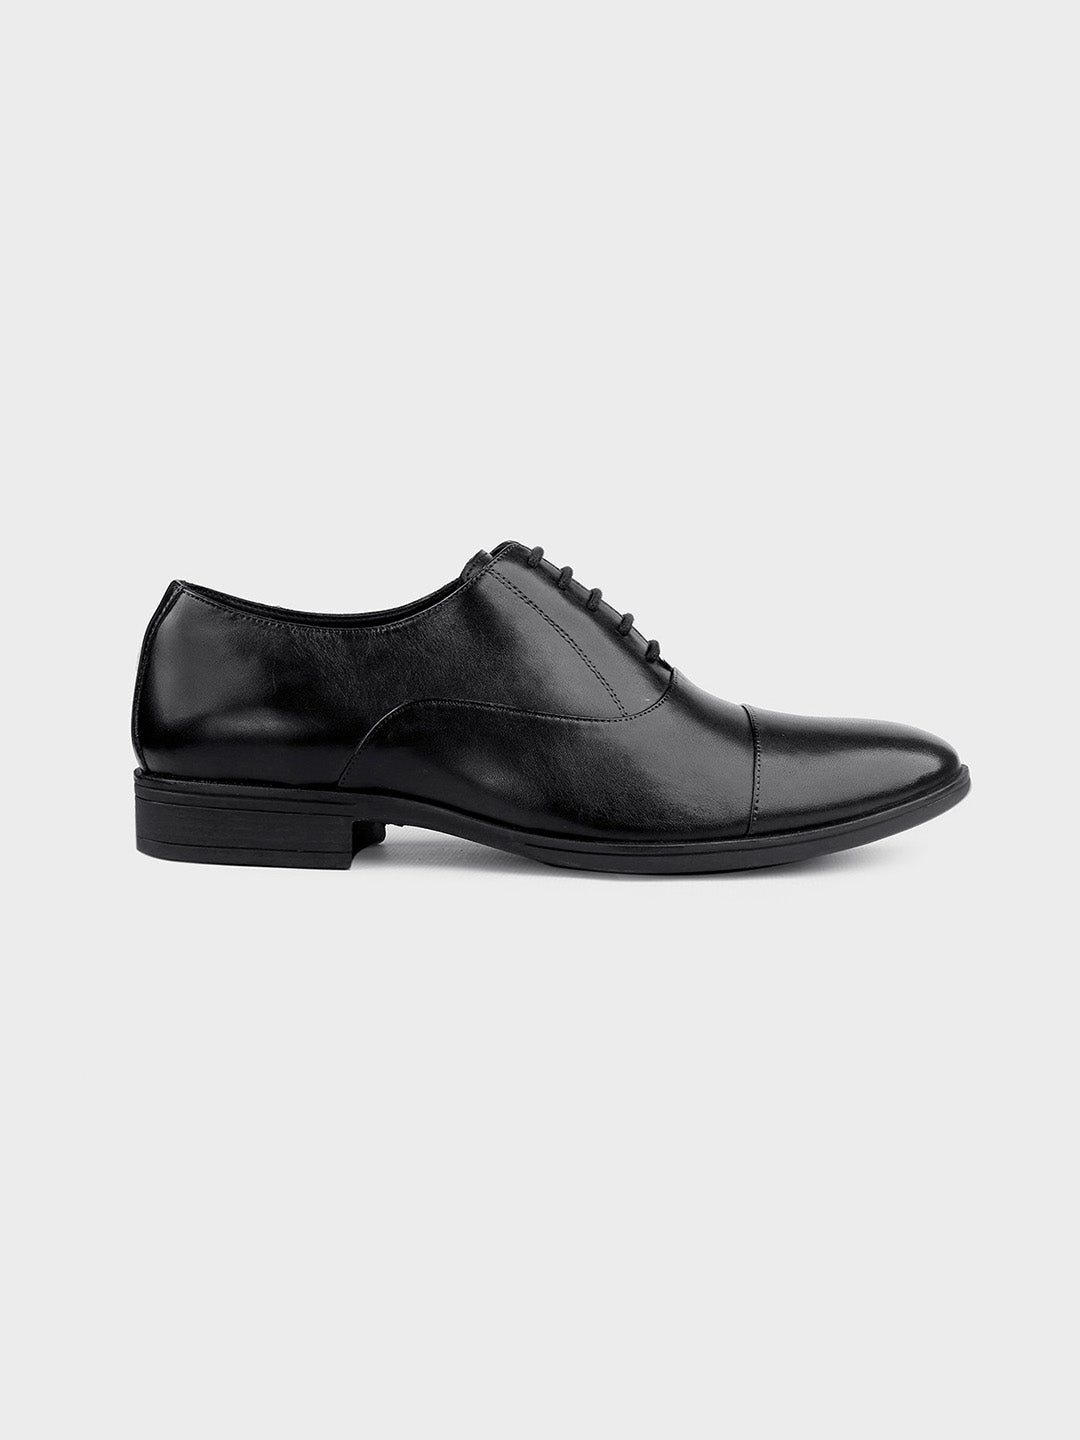 Men's Classic Black Leather Oxford Lace-Up Shoes